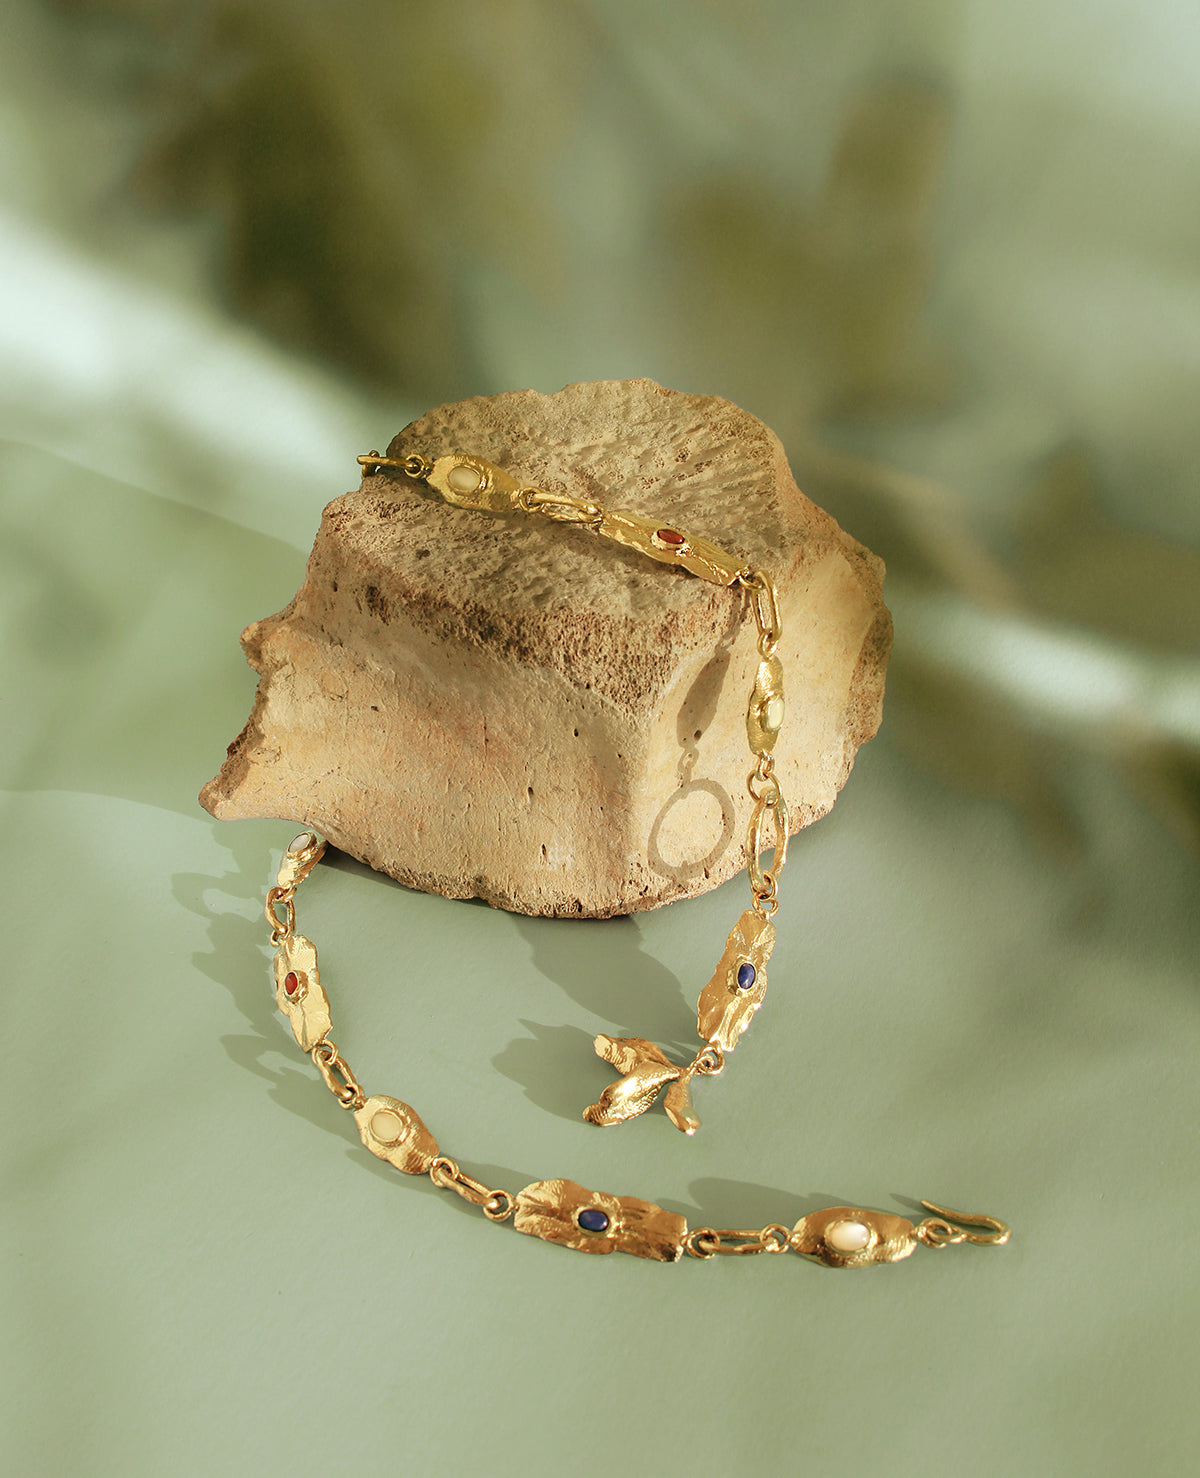 OXALIS ARMOR // necklace - ORA-C jewelry - handmade jewelry by Montreal based independent designer Caroline Pham